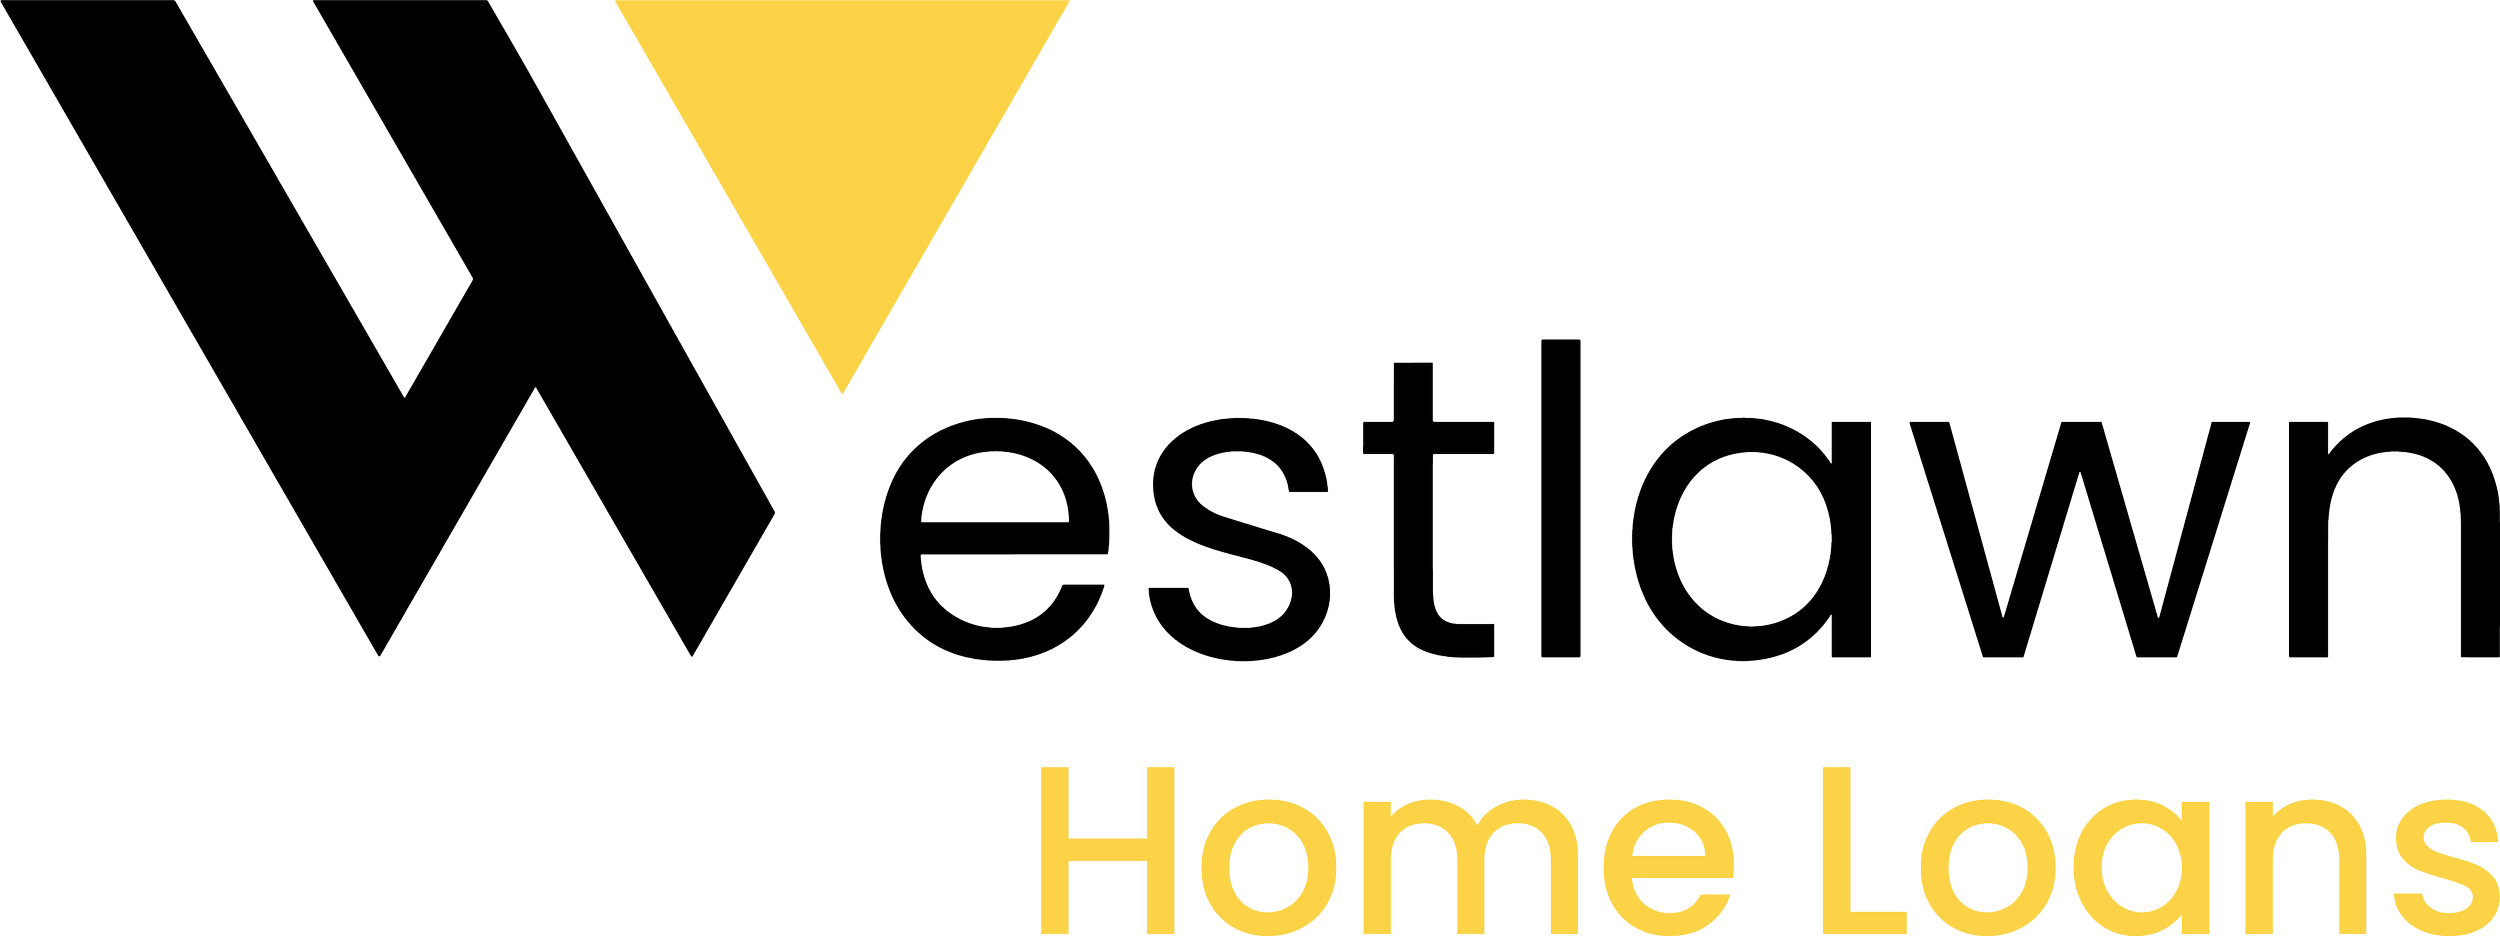 Westlawn Logo - Horizontal - Home Loans.png